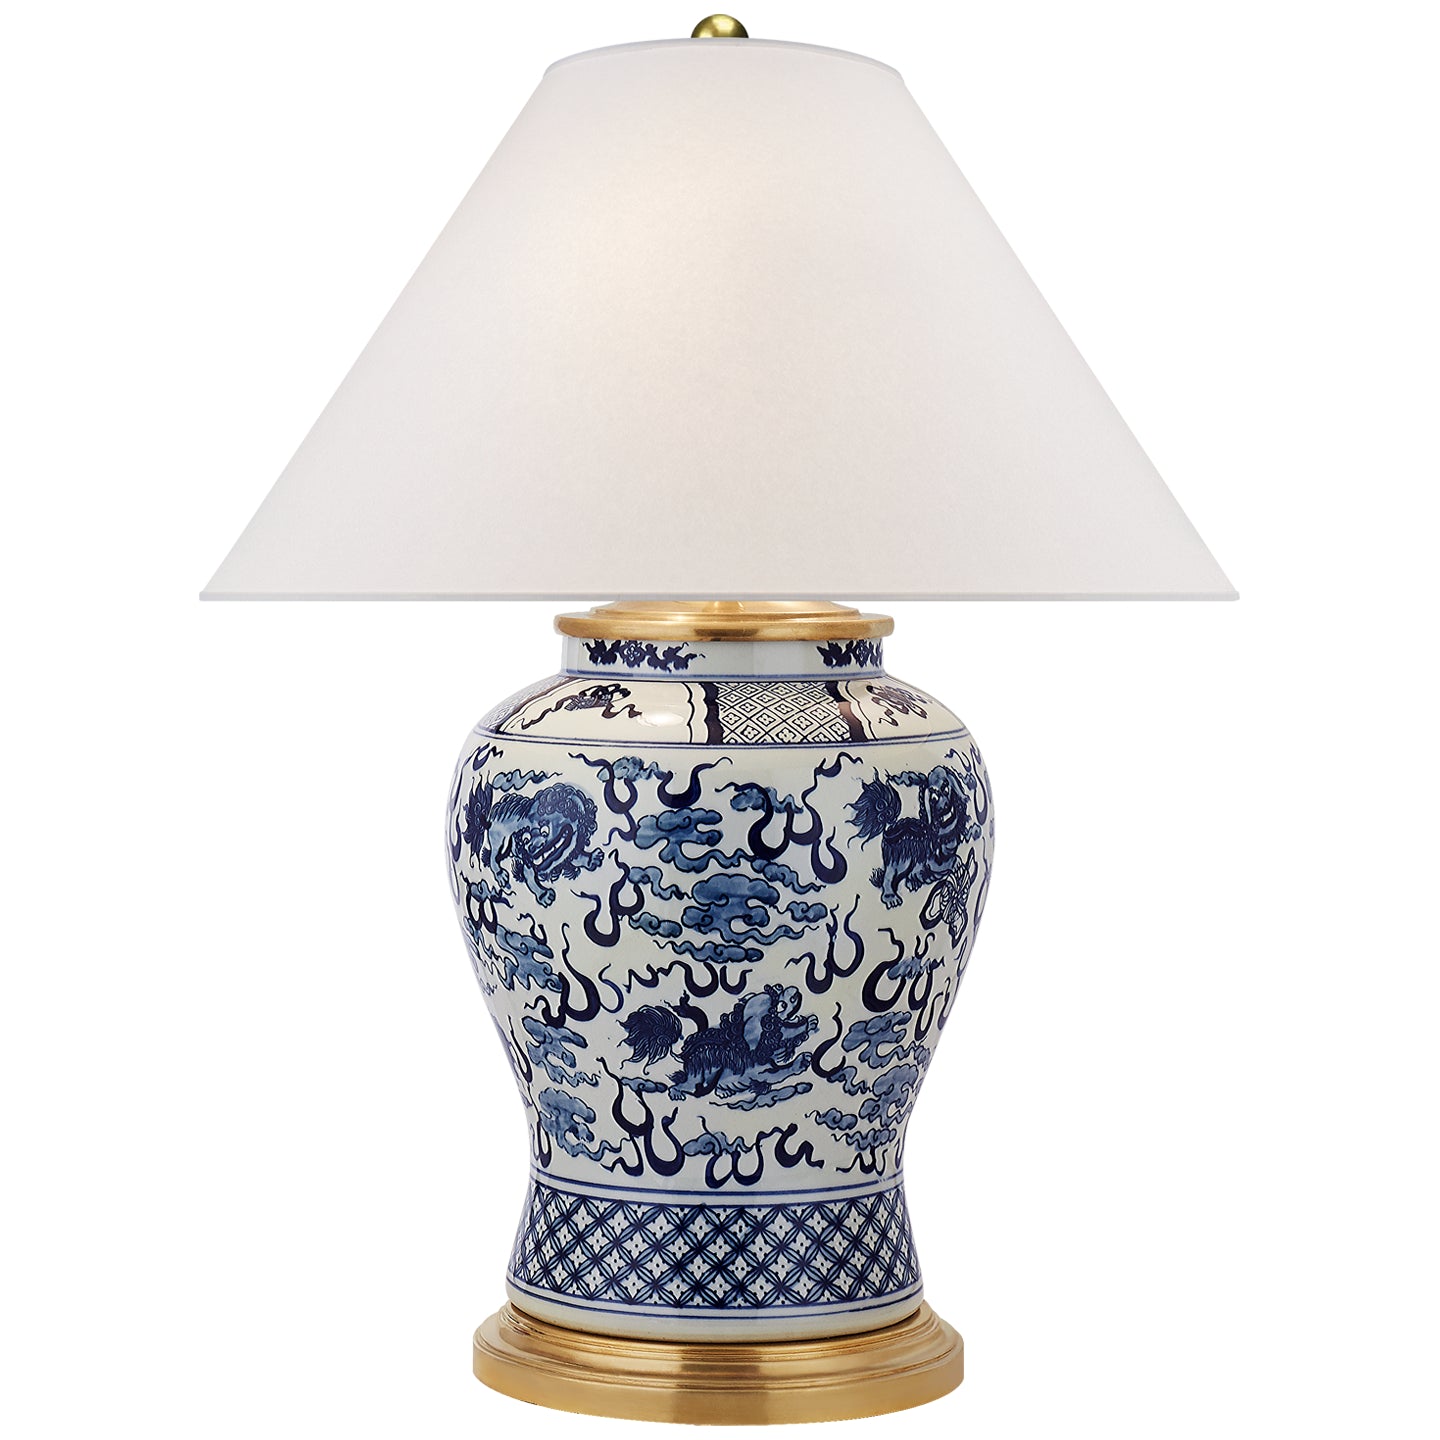 Ralph Lauren Canada - Two Light Table Lamp - Foo Dog - Blue and White Porcelain- Union Lighting Luminaires Decor